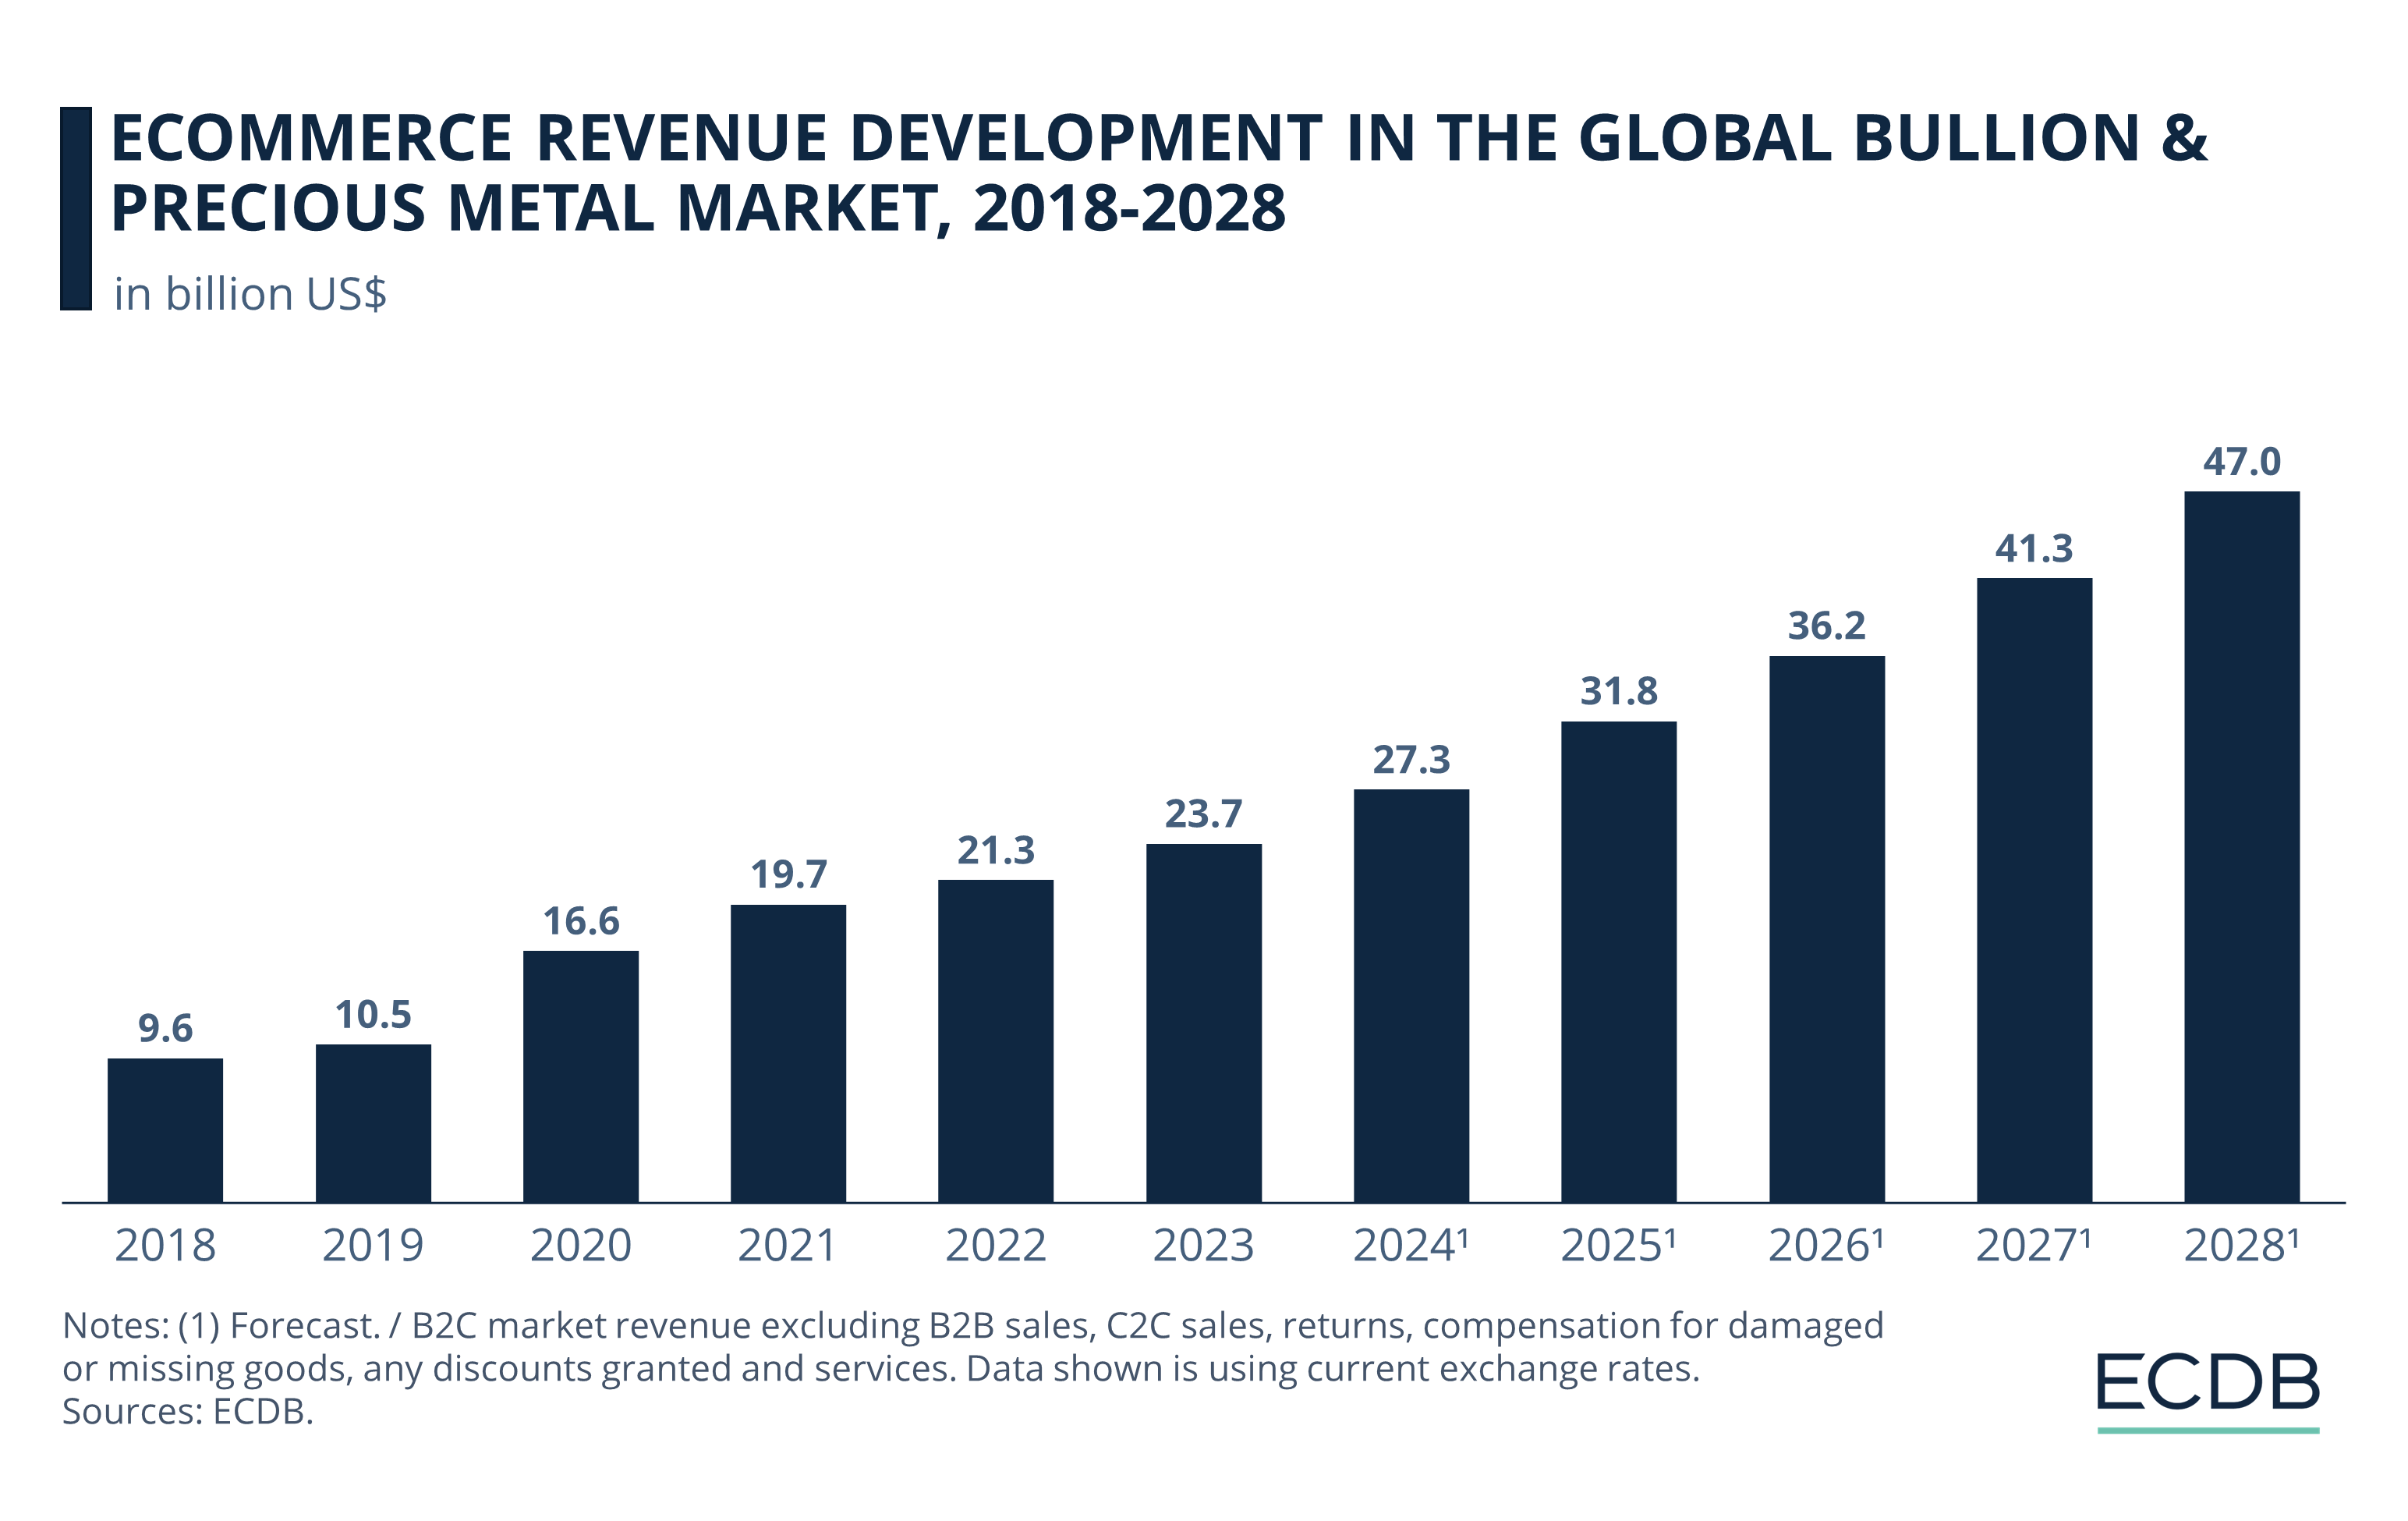 eCommerce Revenue Development in the Global Bullion & Precious Metal Market, 2018-2028